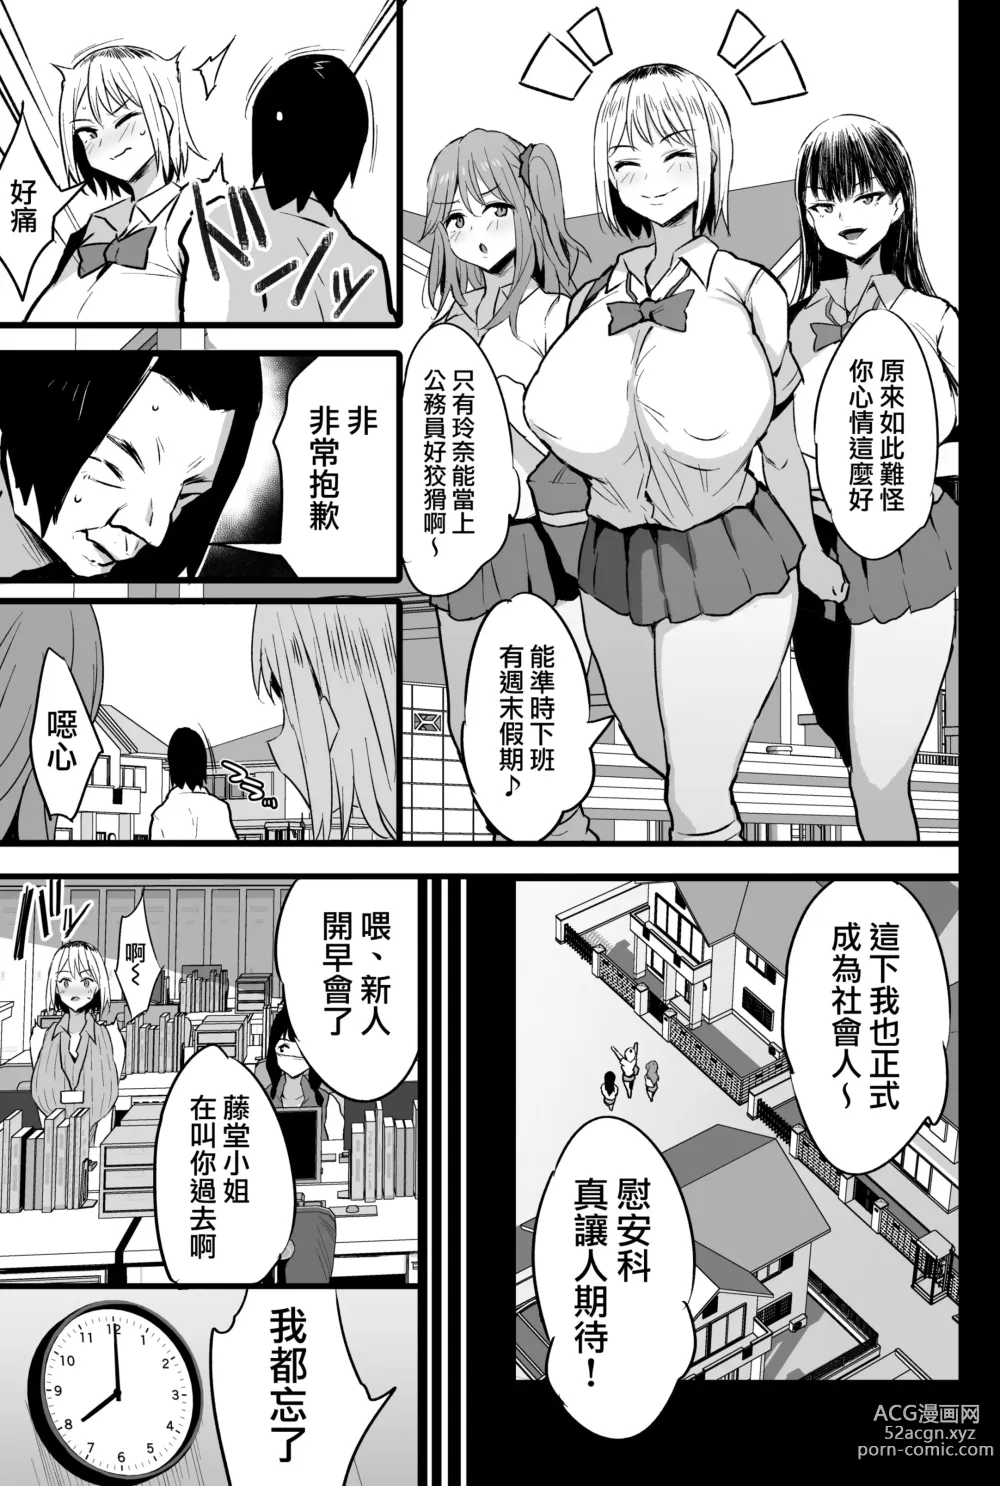 Page 8 of doujinshi 被分配到的部門是慰安科 2